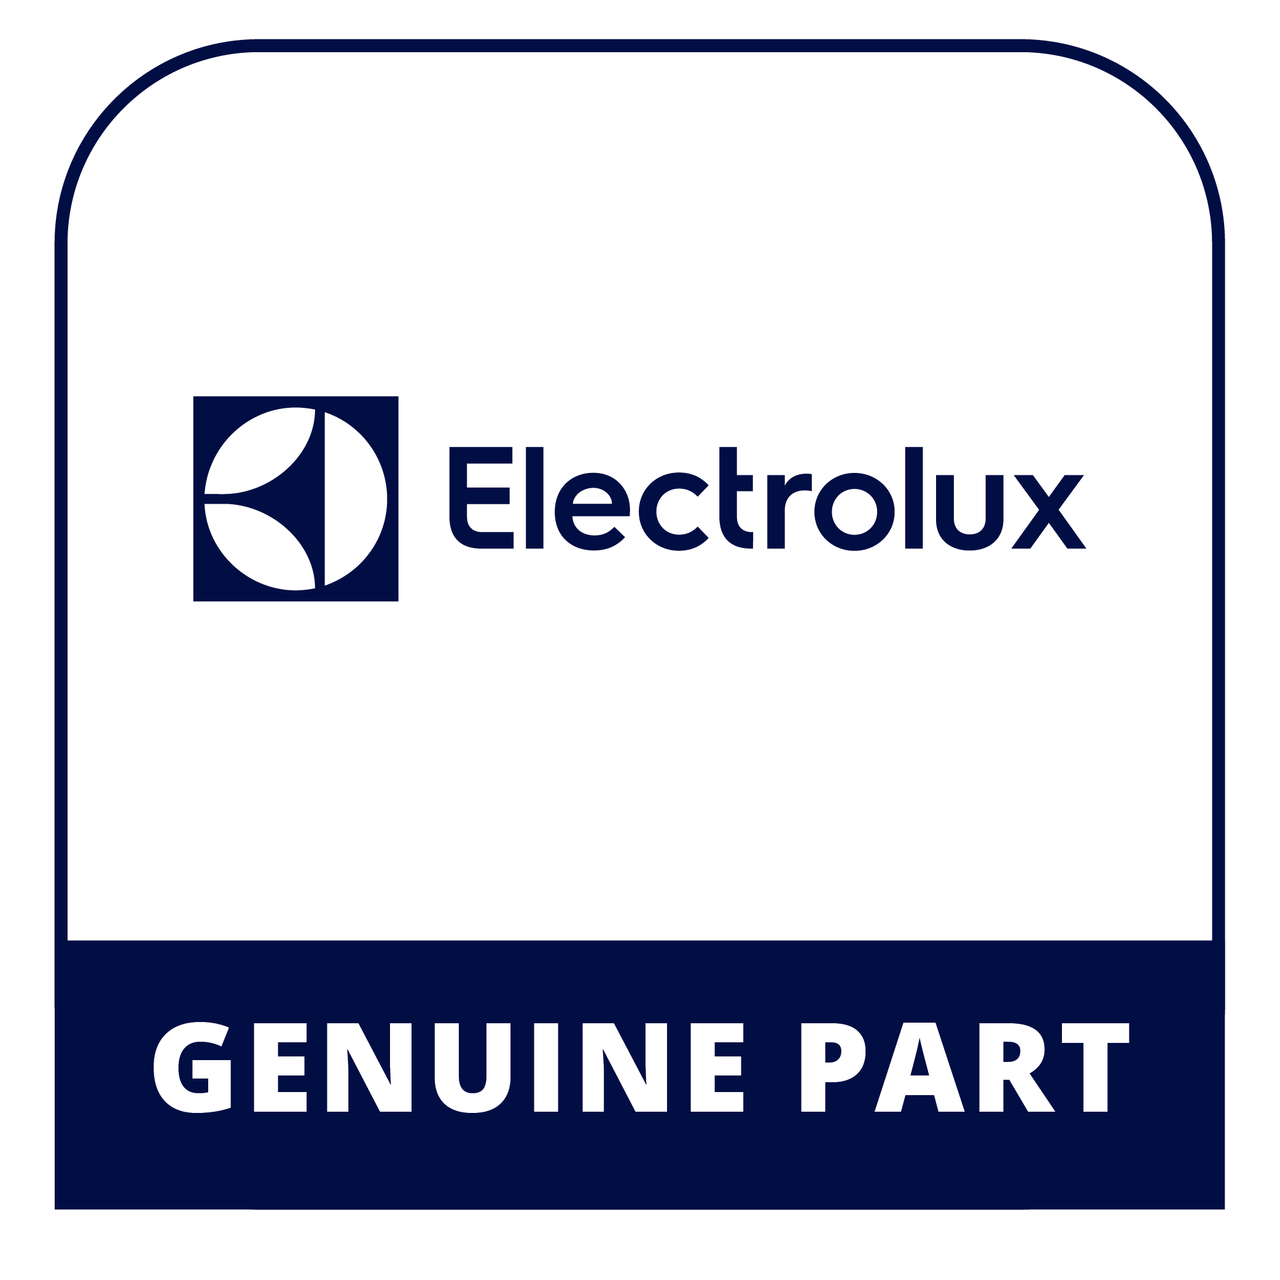 Frigidaire - Electrolux 5304493025 Actuator Kit Silver - Genuine Electrolux Part